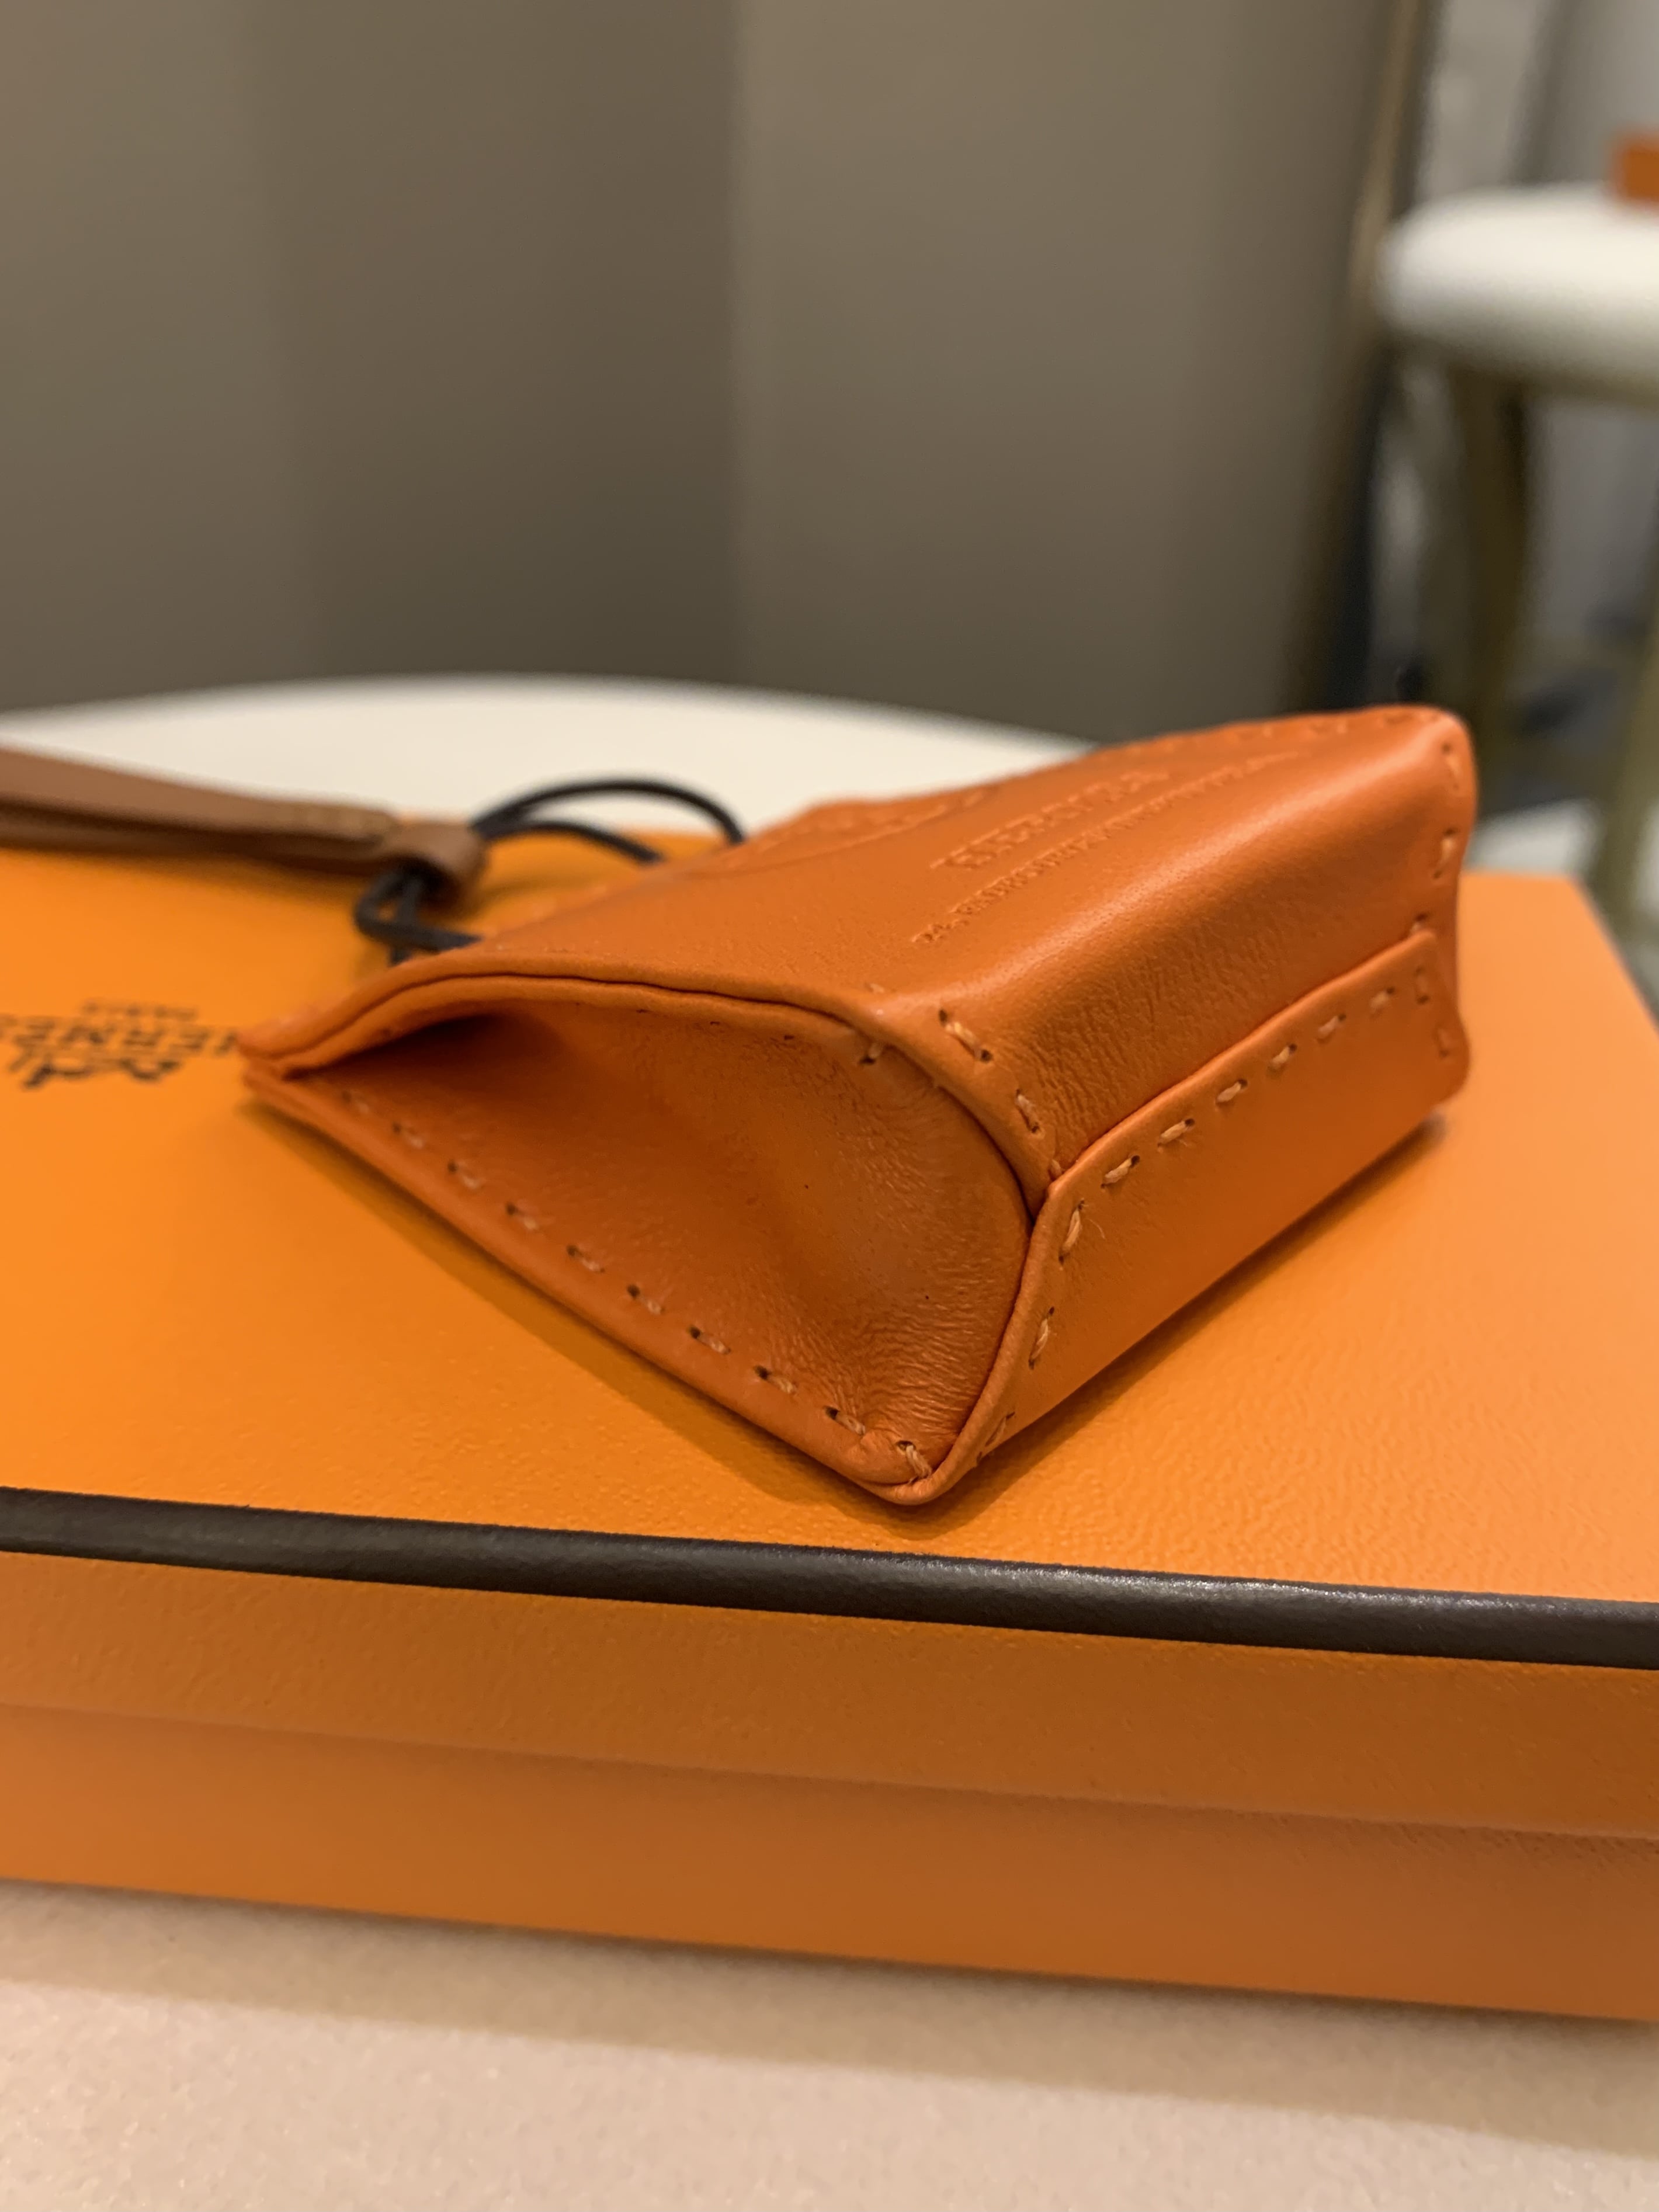 Hermes Paper Bag Charm Orange Feu